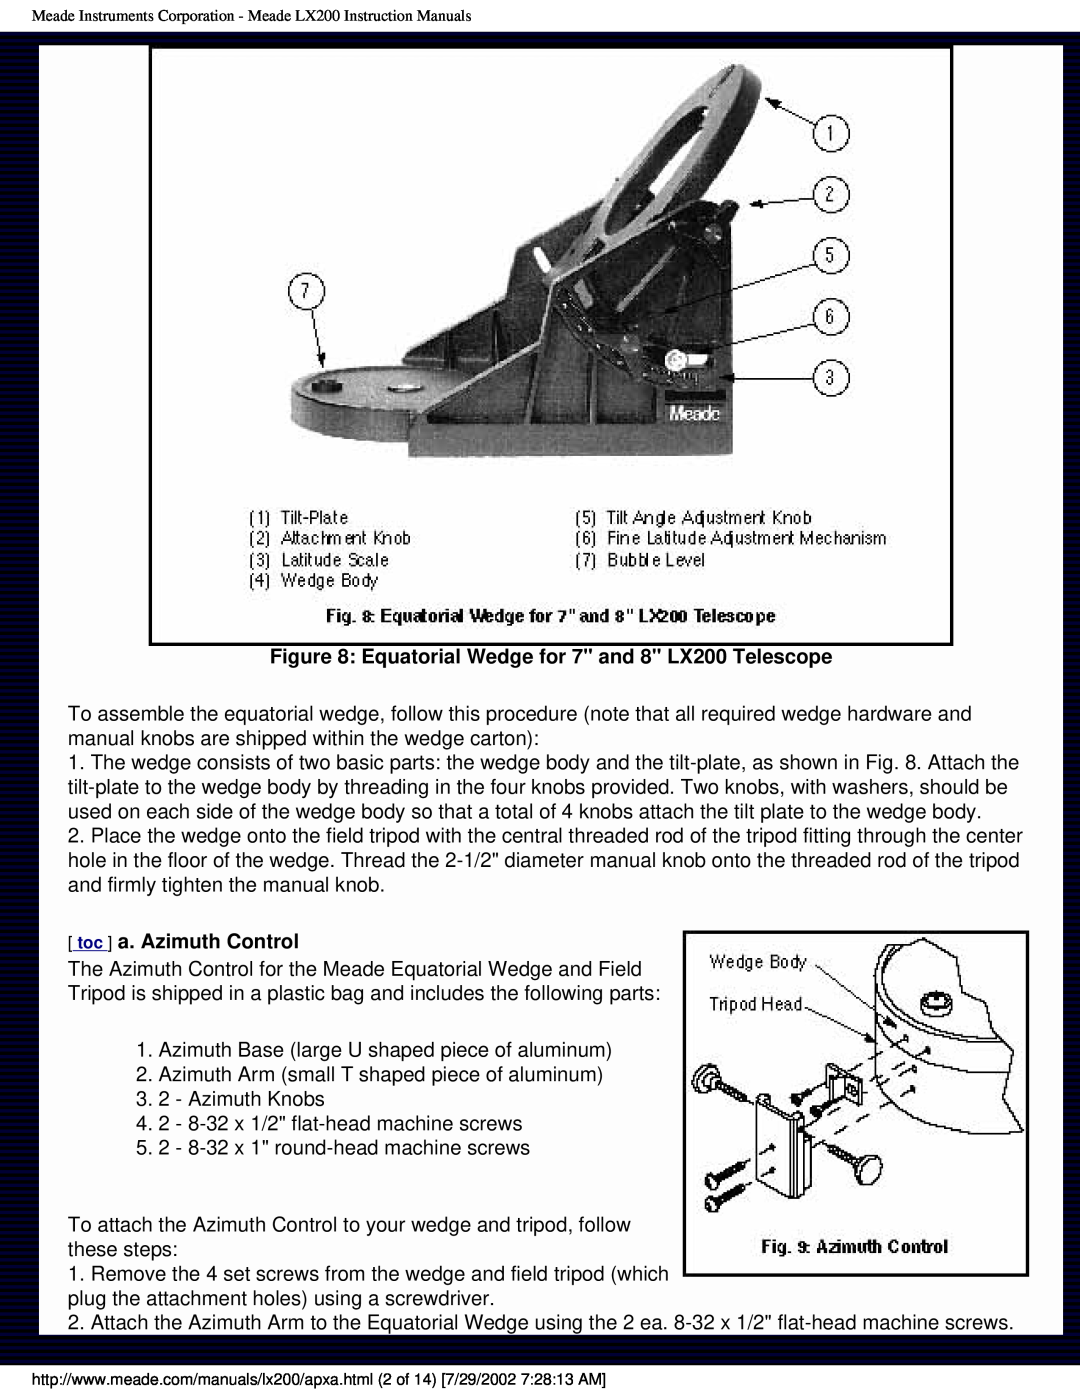 Meade LX200 instruction manual toc a. Azimuth Control 